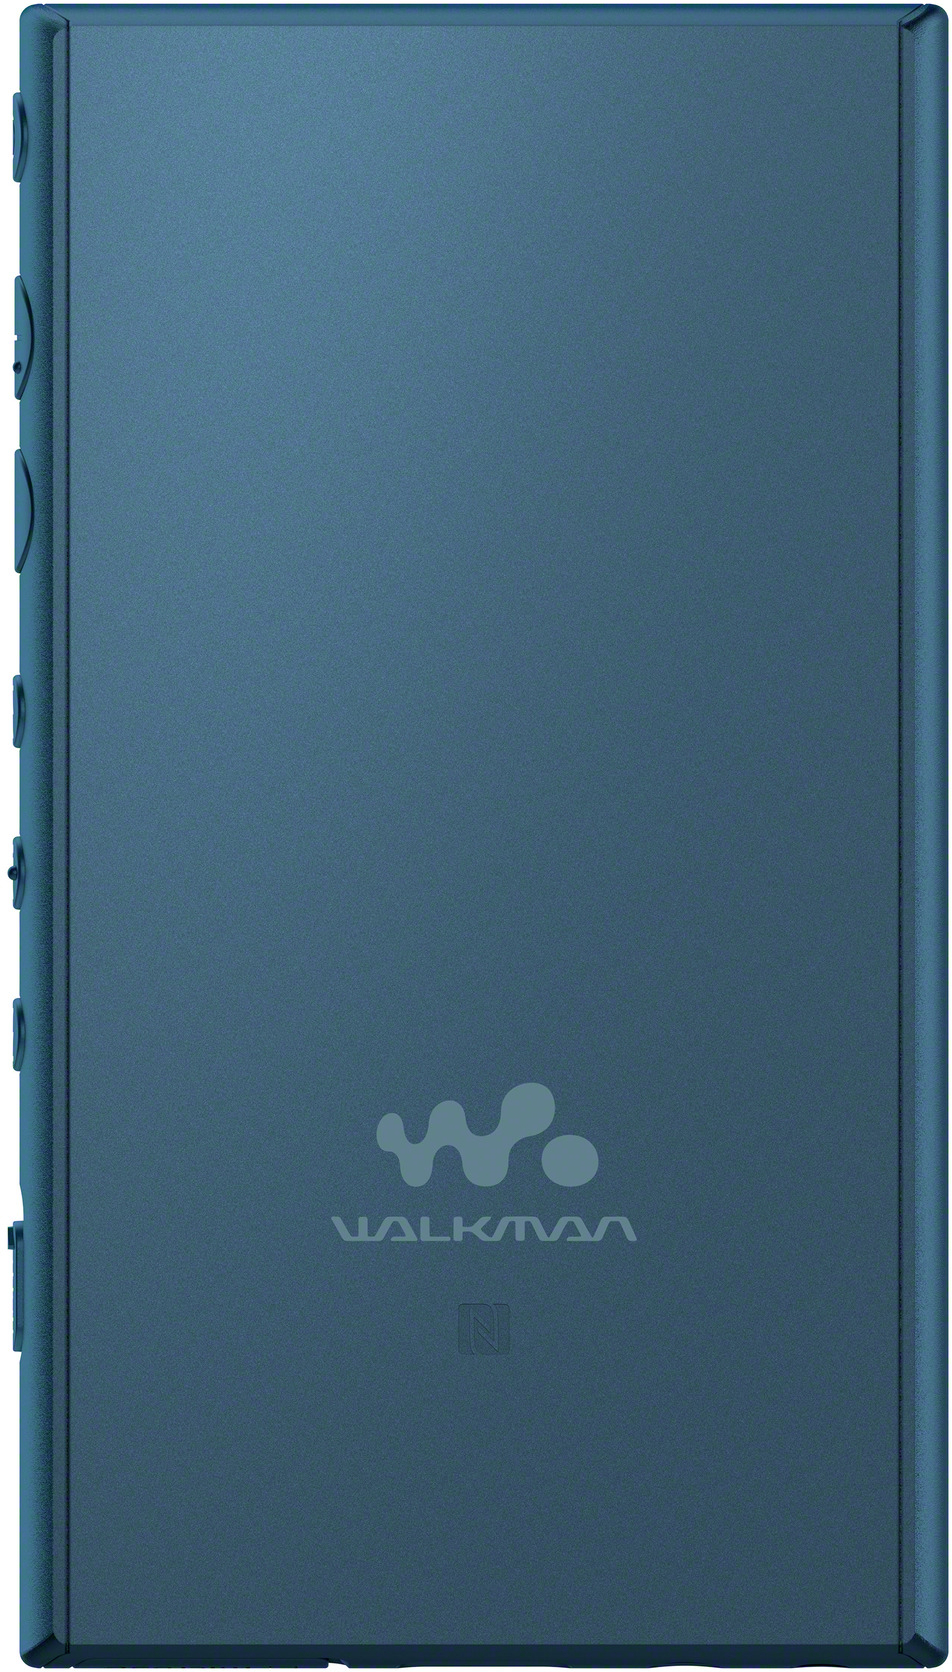 NW-A105 Walkman Android SONY GB, 9.0 Blau 16 Mp3-Player